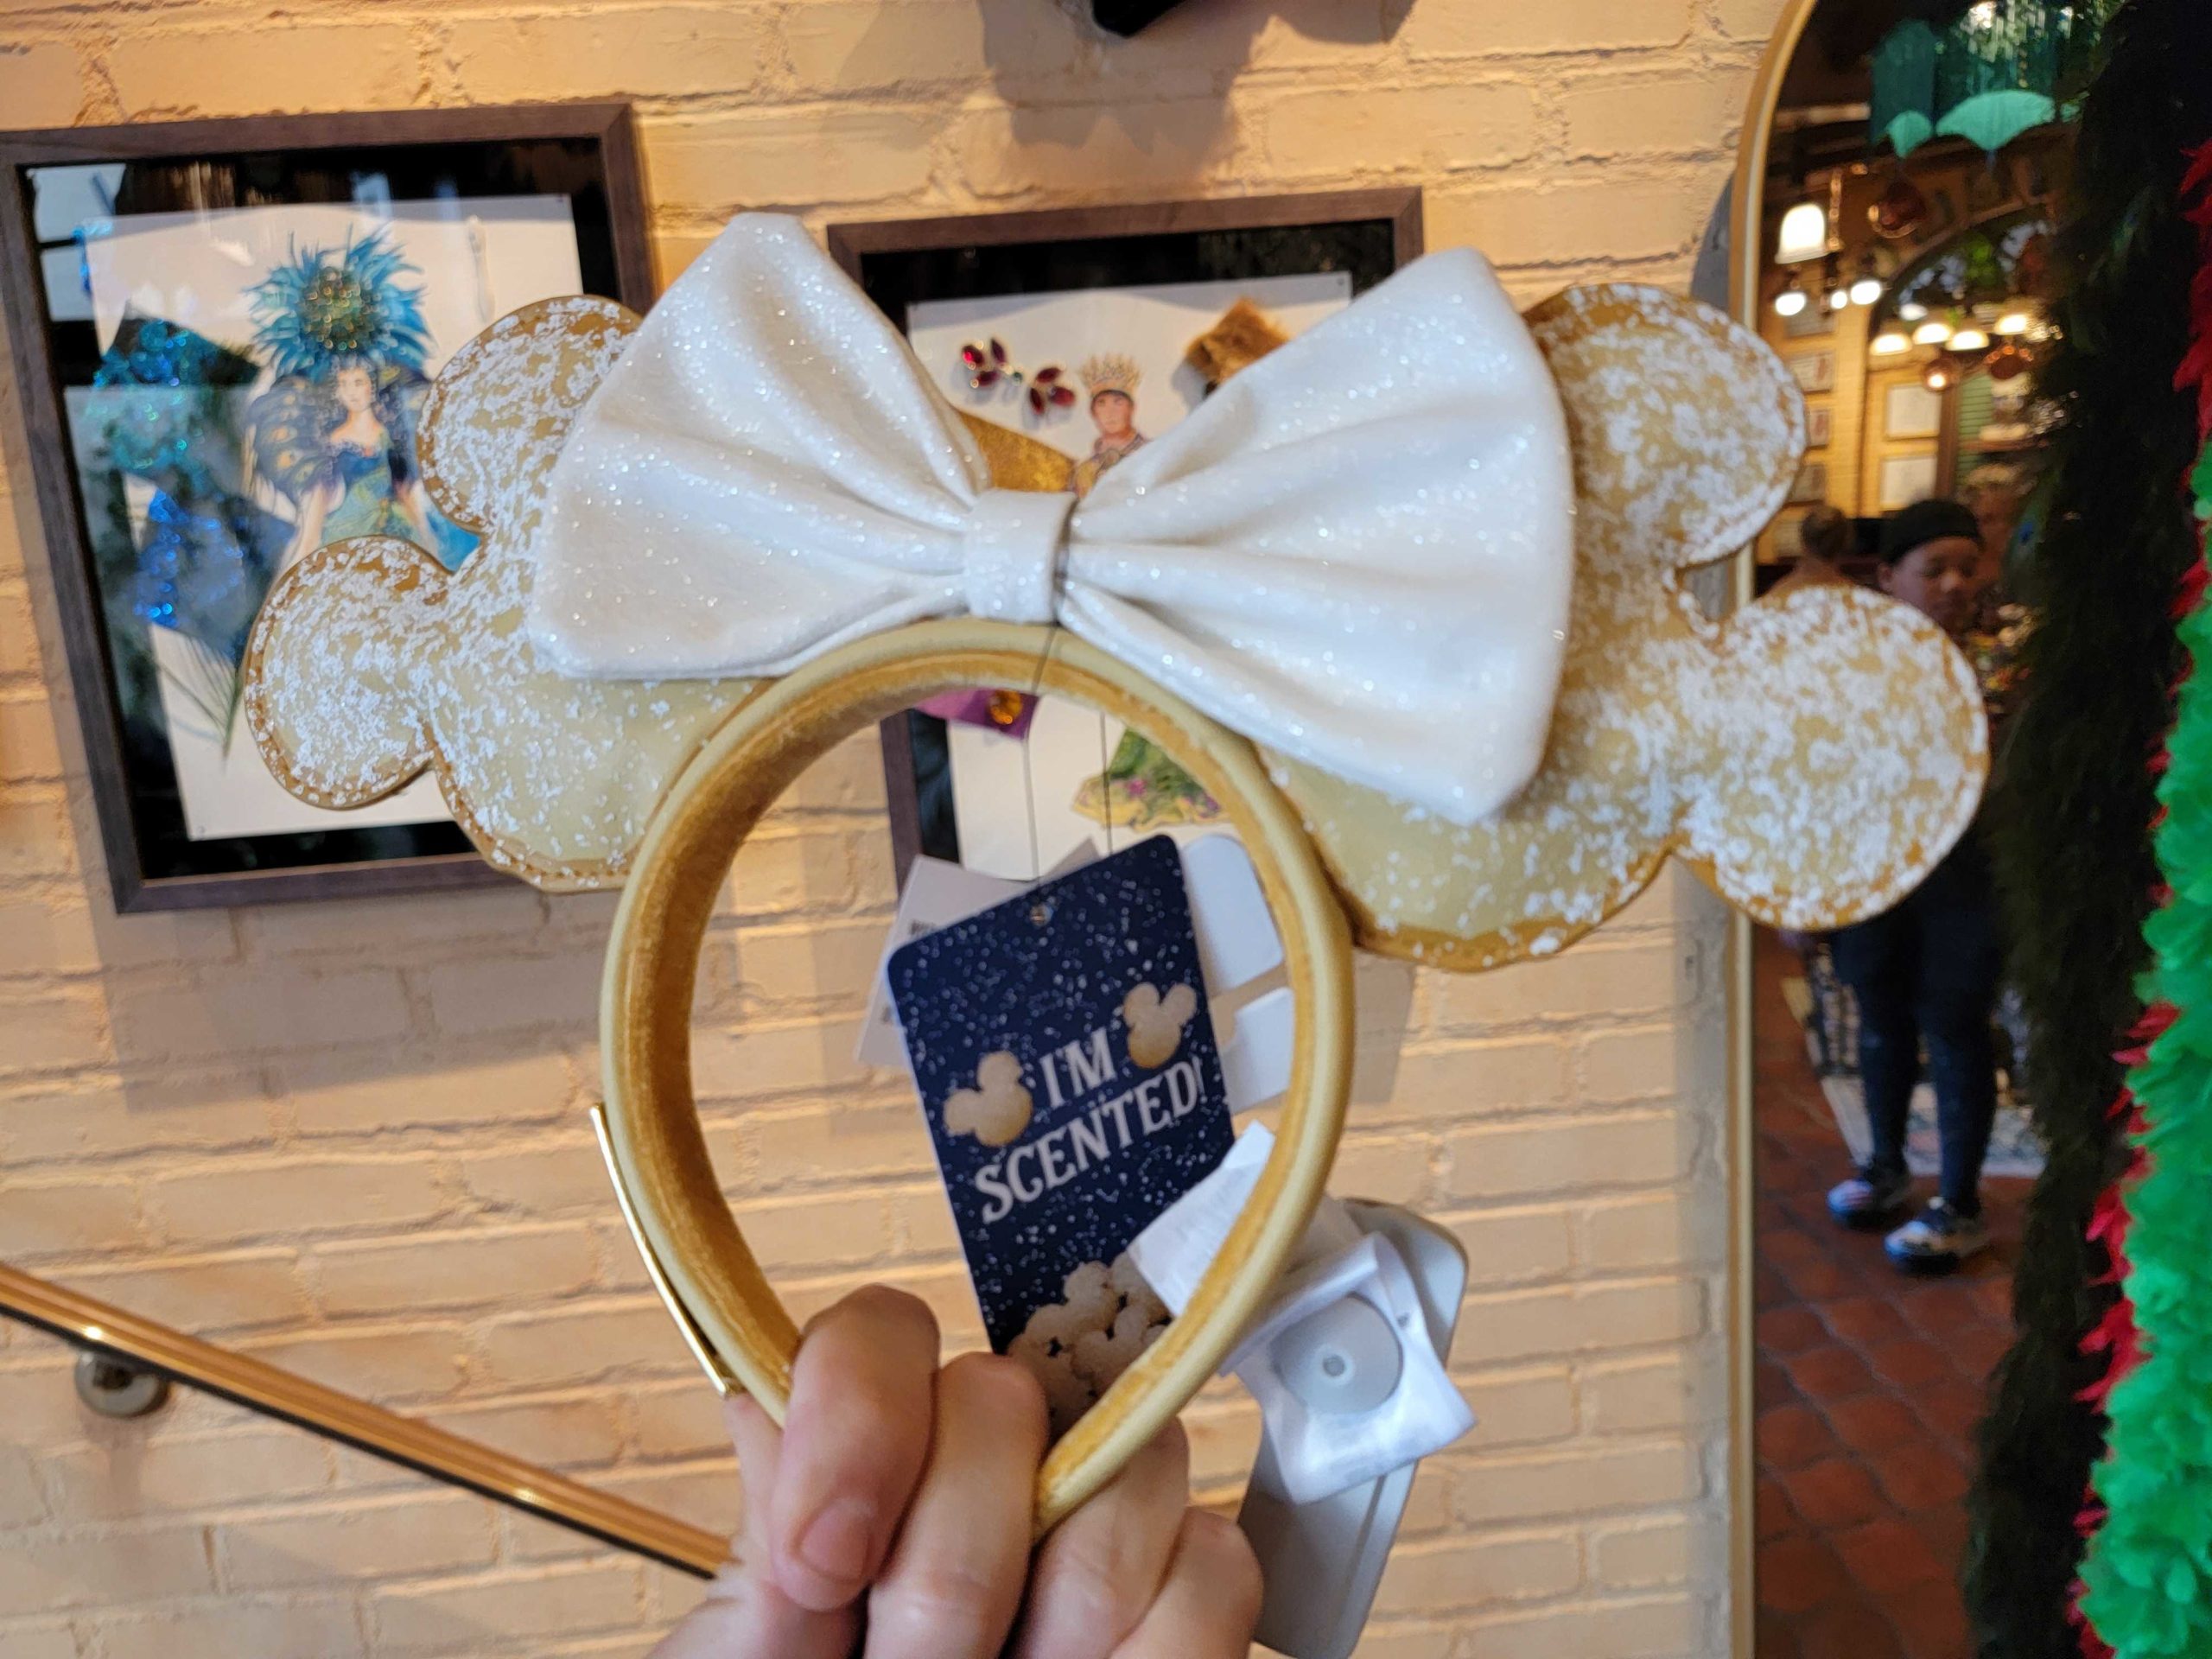 Disneyland Eudora's Chic Boutique featuring Tiana's Gourmet Secrets Beignet headband full view